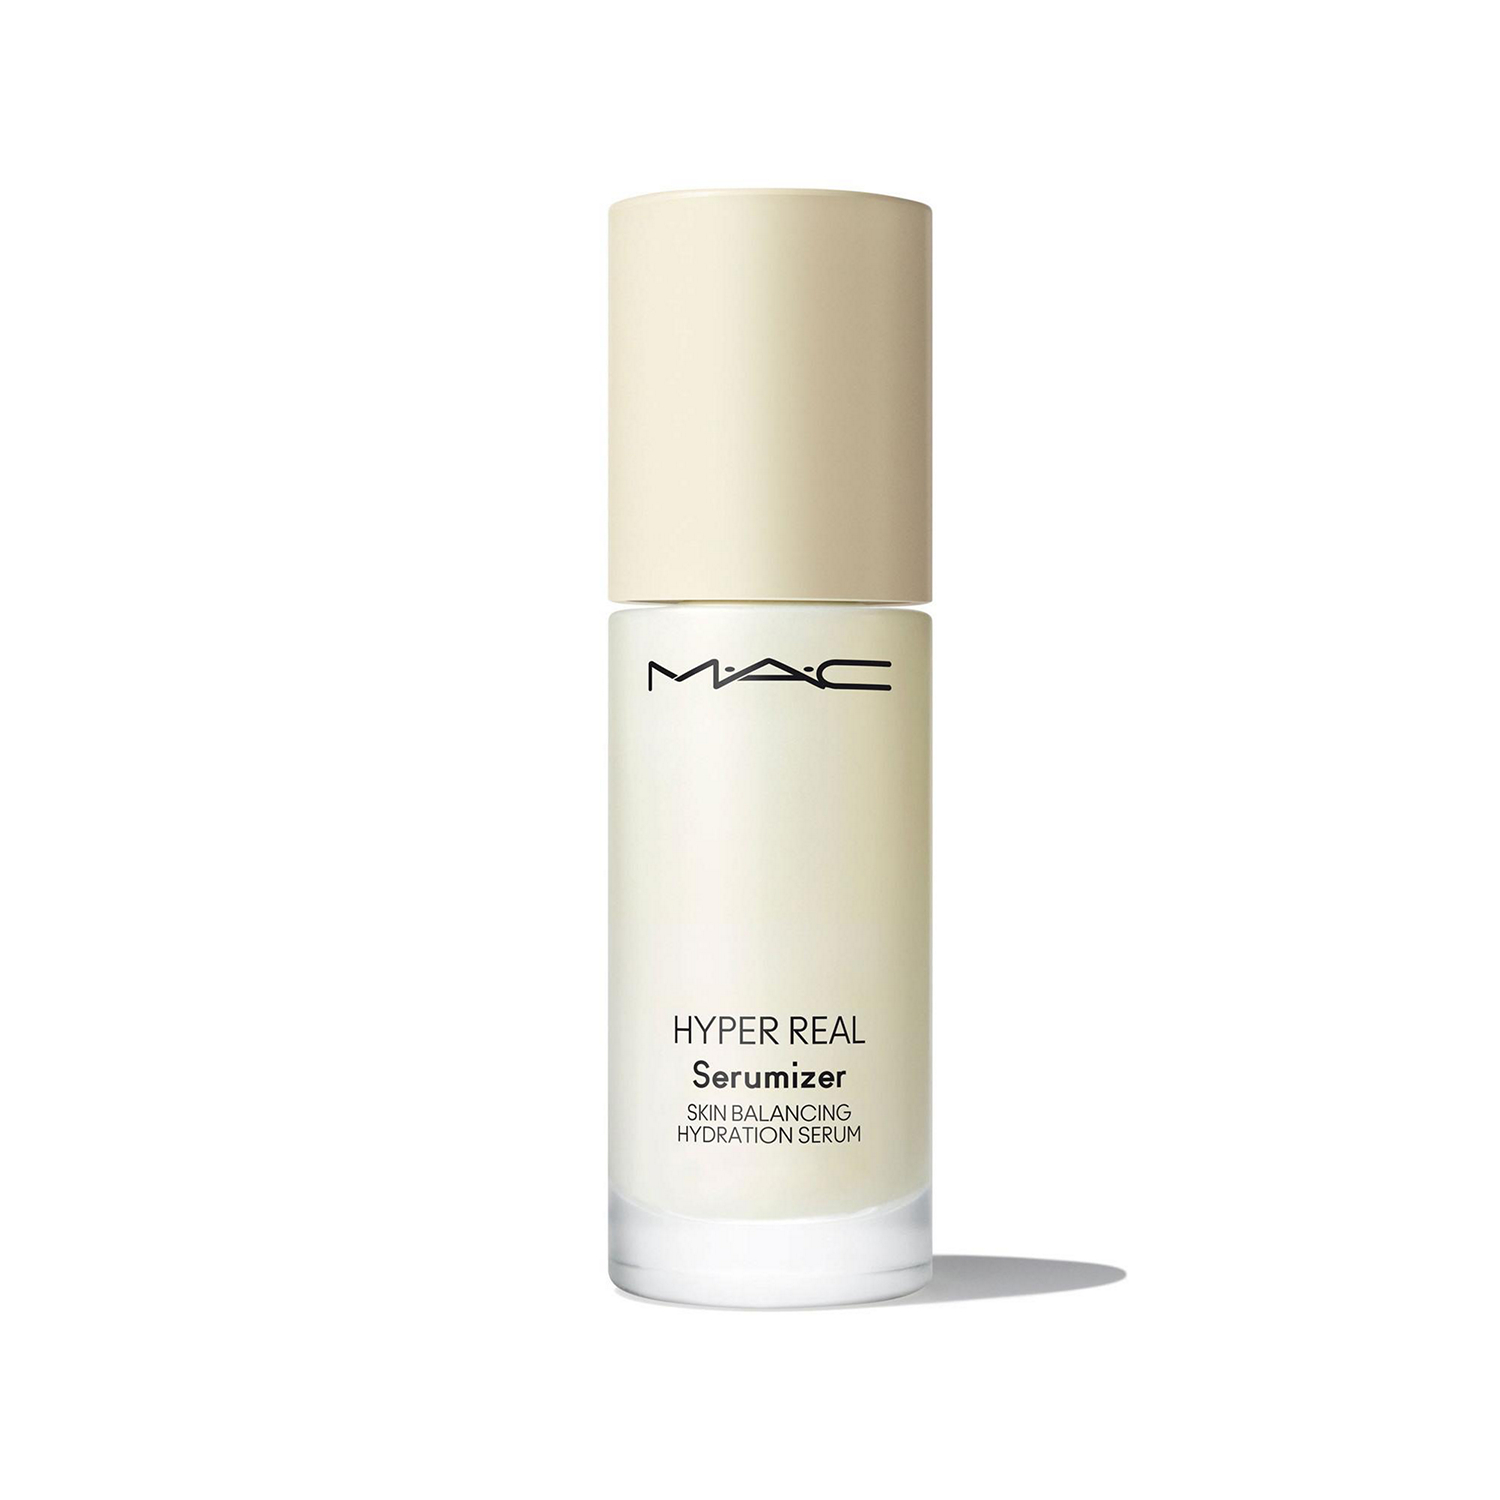 MAC	Hyper Real Serumizer skin balancing hydration serum